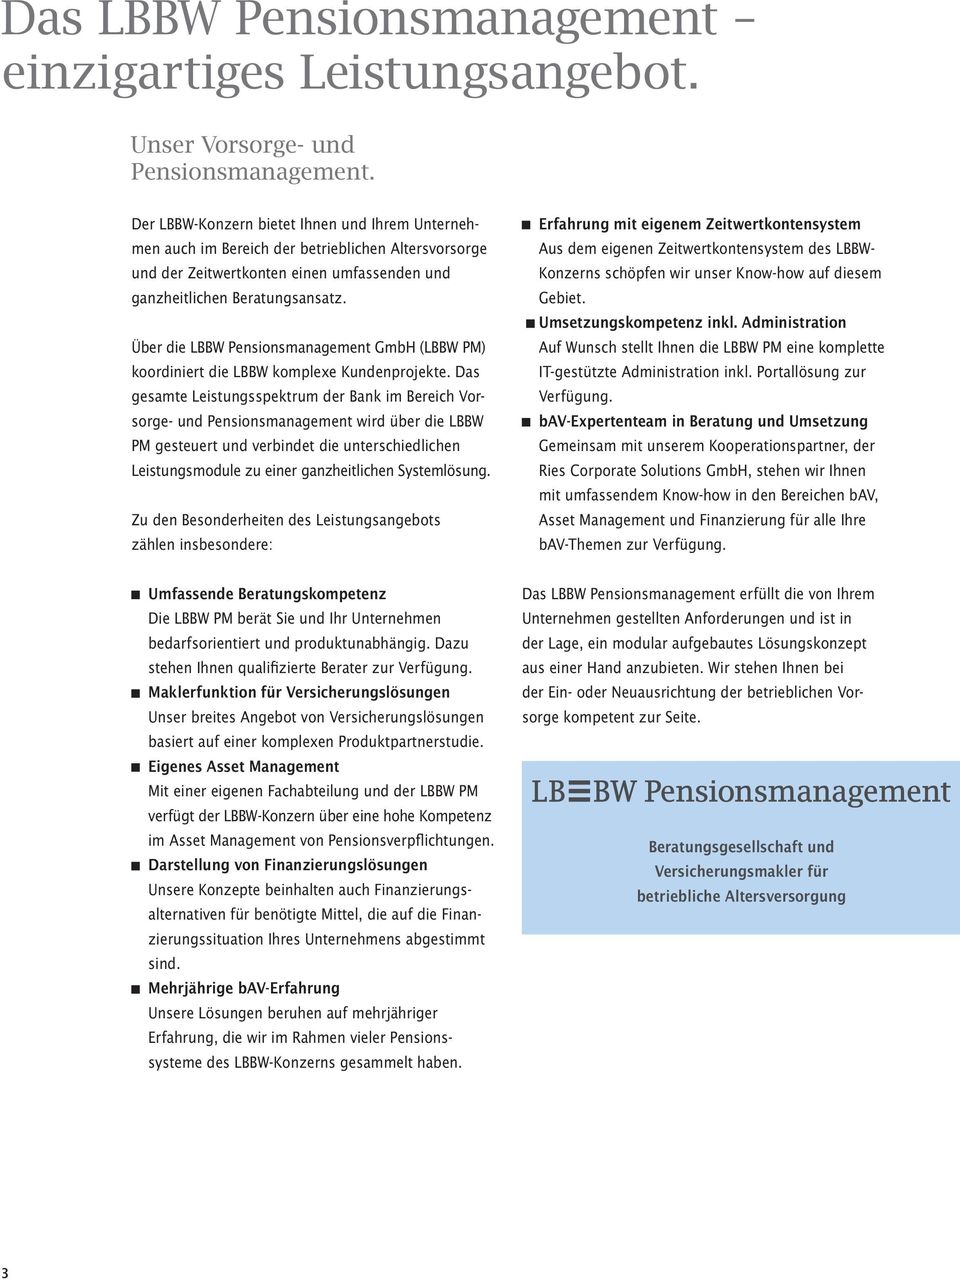 Über die LBBW Pensionsmanagement GmbH (LBBW PM) koordiniert die LBBW komplexe Kundenprojekte.